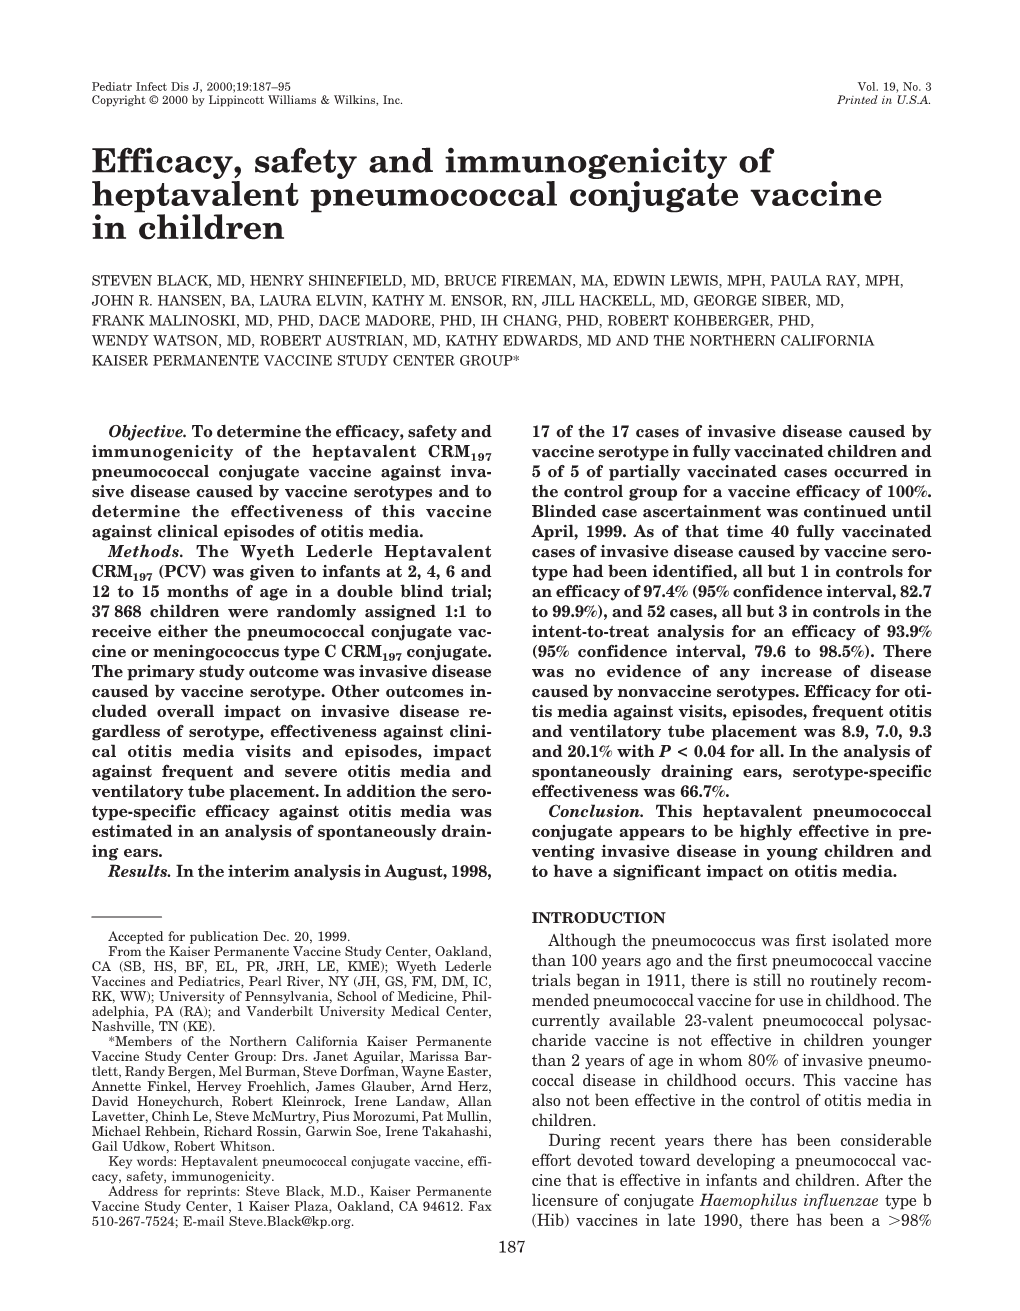 Efficacy, Safety and Immunogenicity of Heptavalent Pneumococcal Conjugate Vaccine in Children